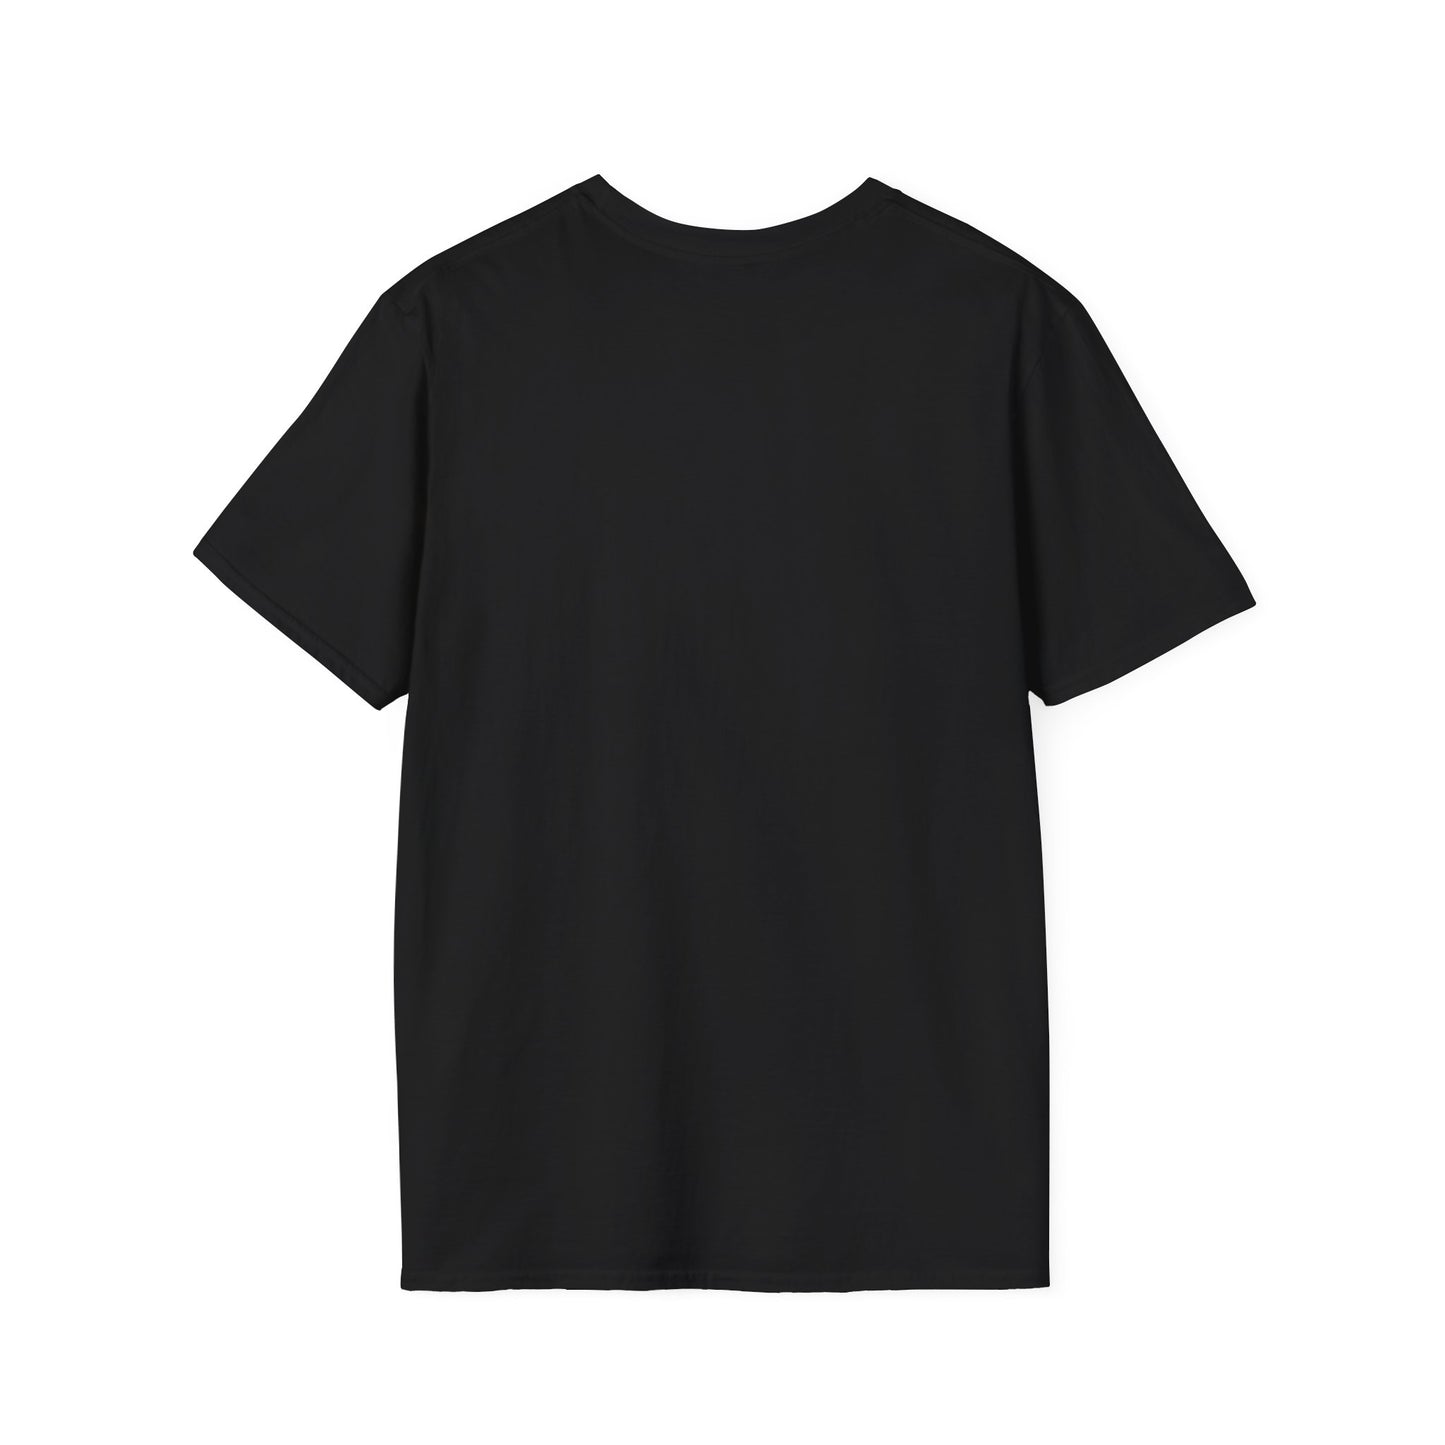 Come To My Basement Arowana Unisex Softstyle T-Shirt by ADHD Aquatics